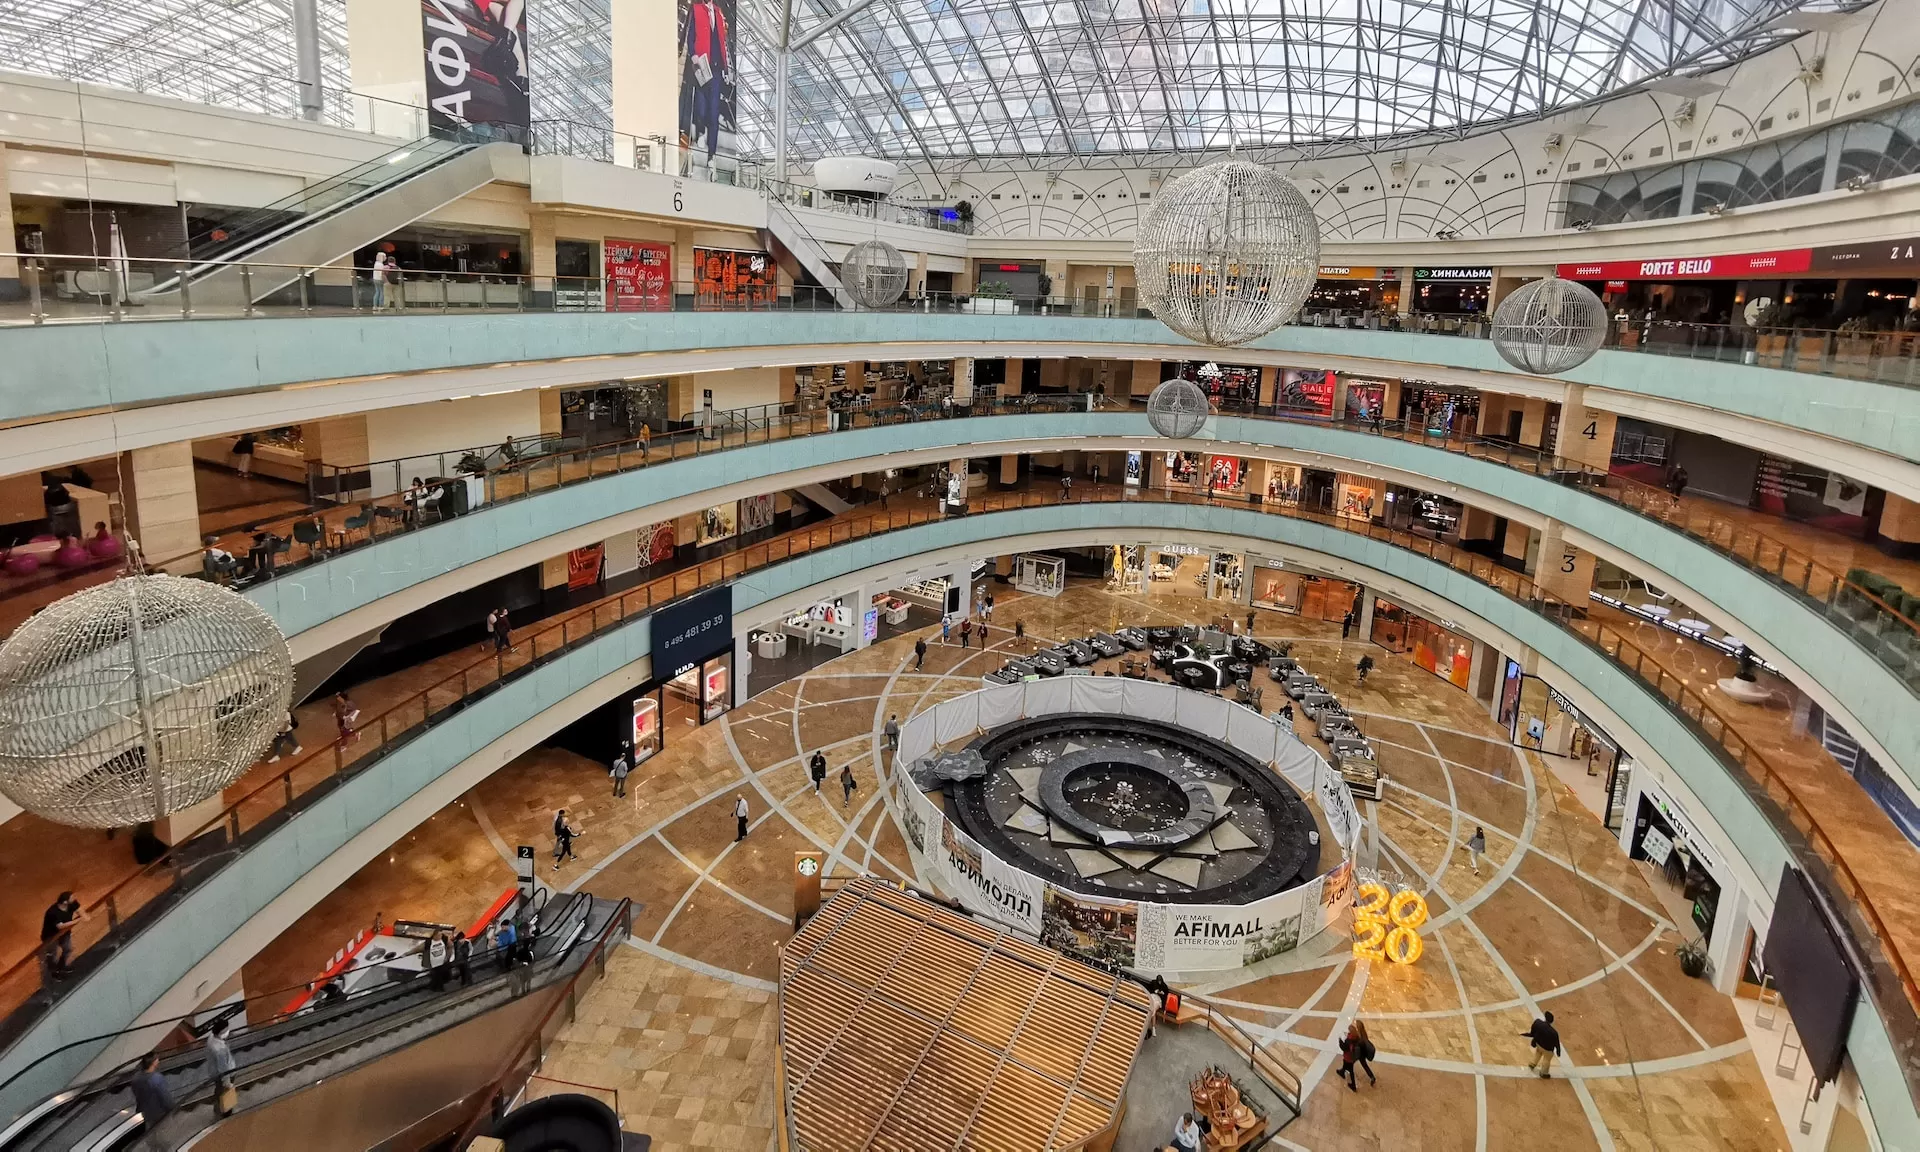 Inilah 3 Mall Termegah di Semarang Bagai Istana Raja: View Super Mewah, Favoritmu yang Mana?